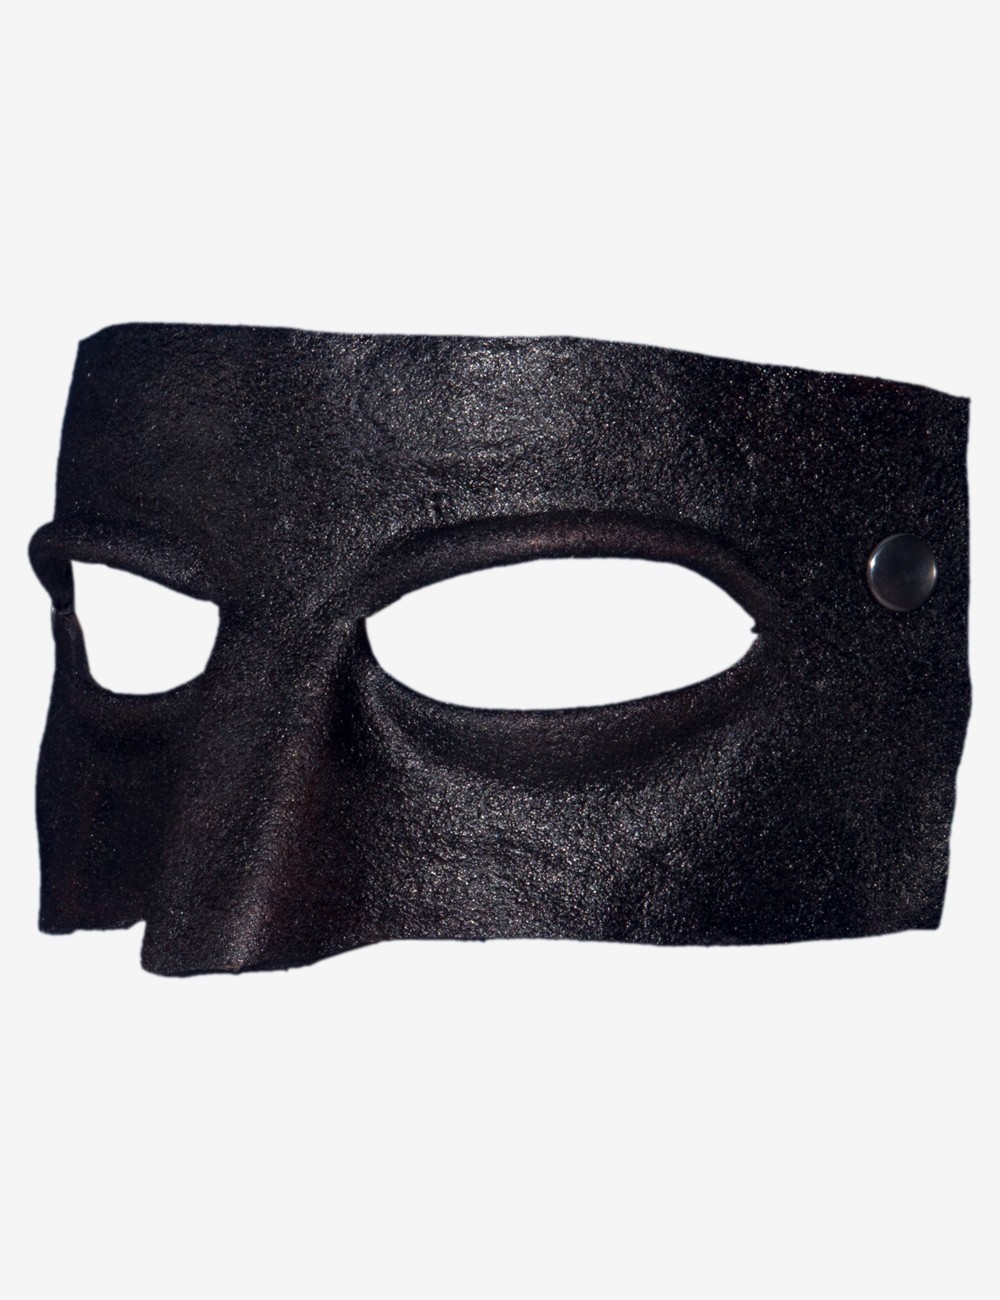 Bandit | venetian mask for sale